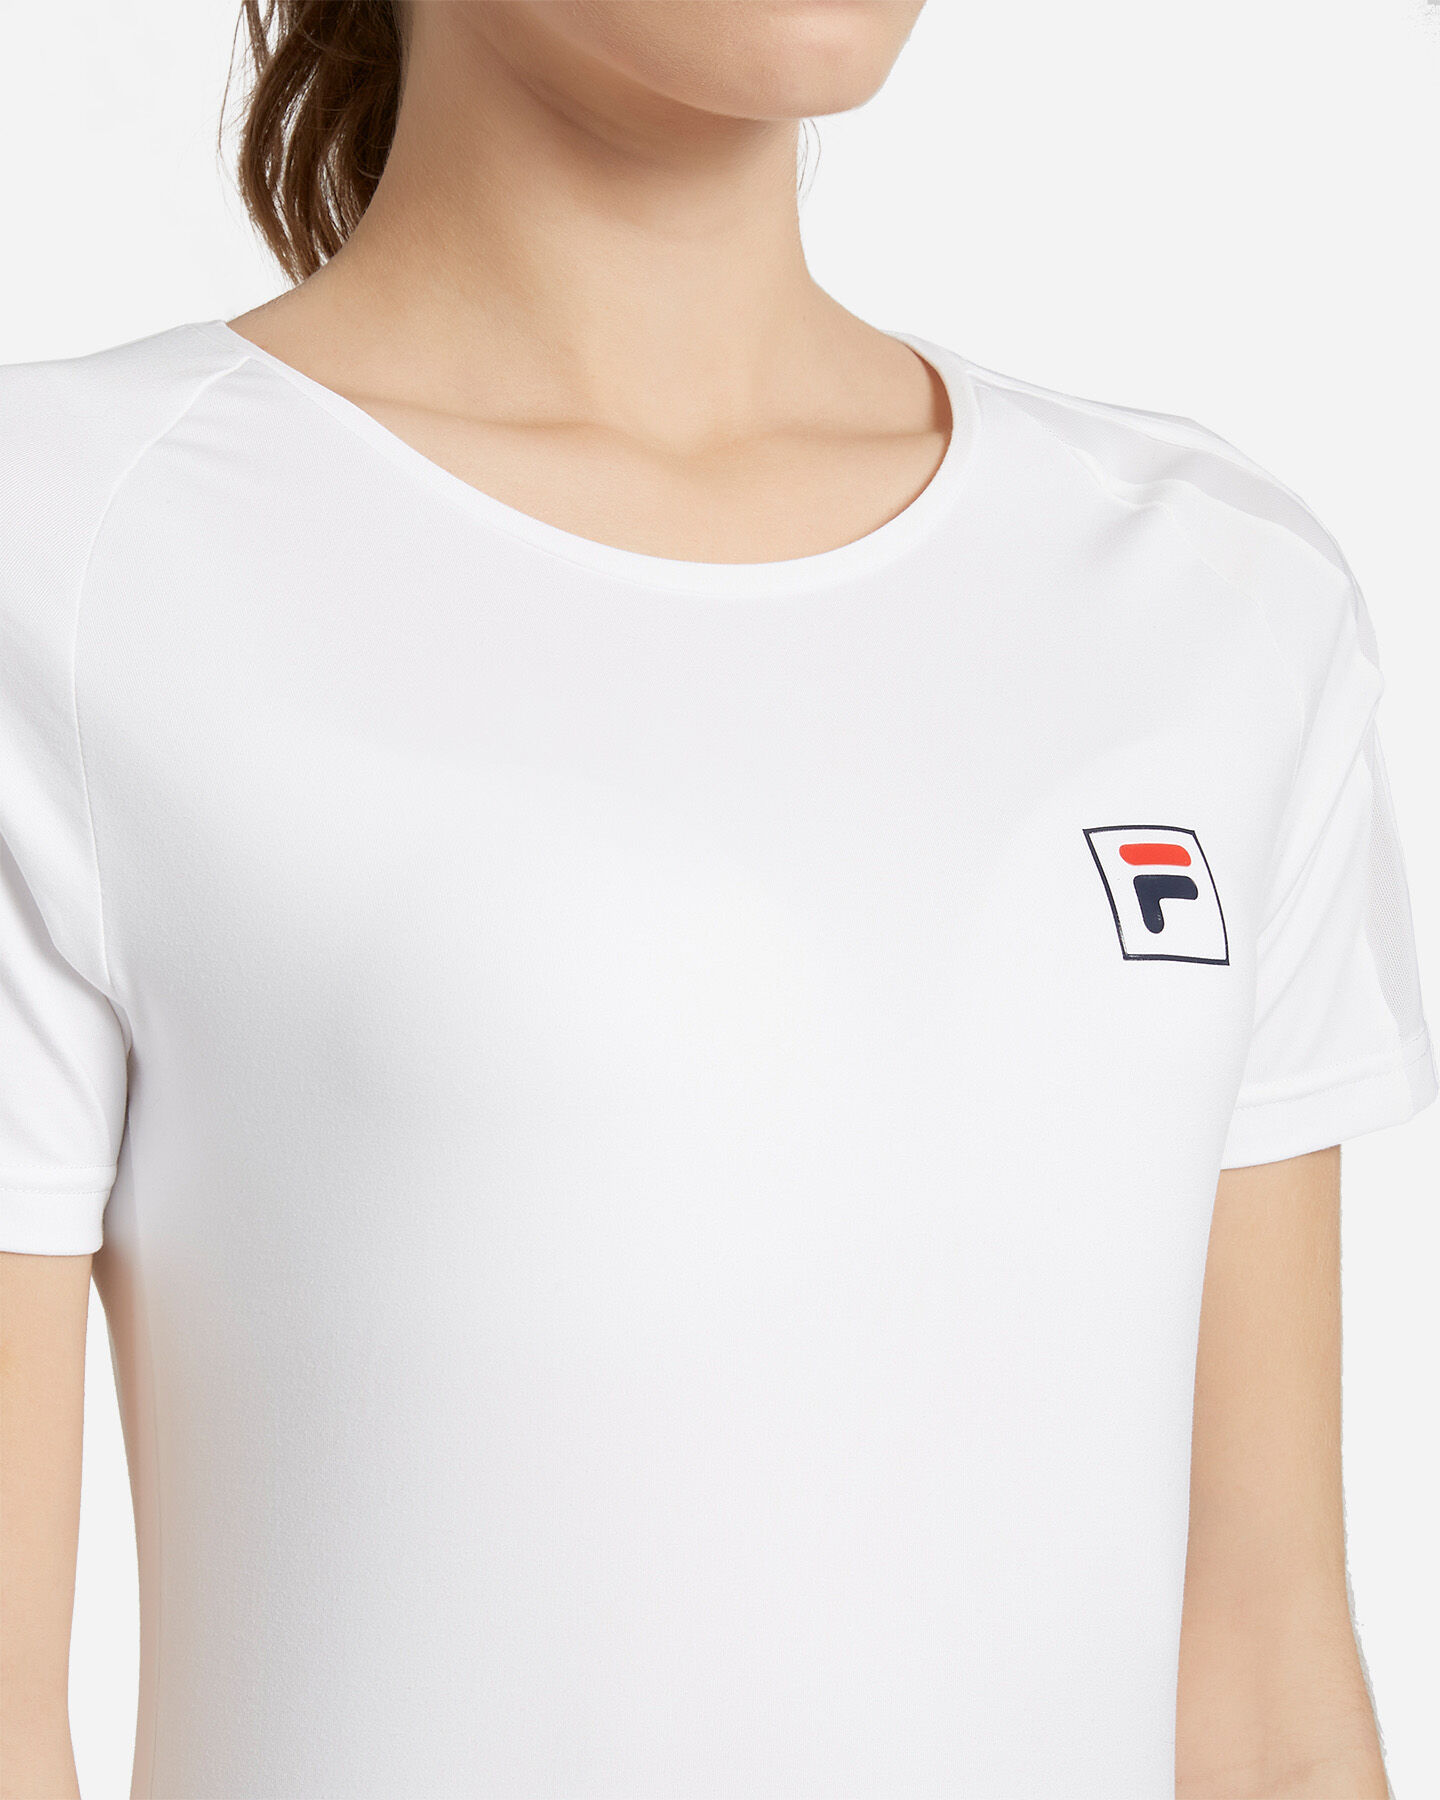  T-Shirt tennis FILA TENNIS W S4075803|001|XS scatto 4